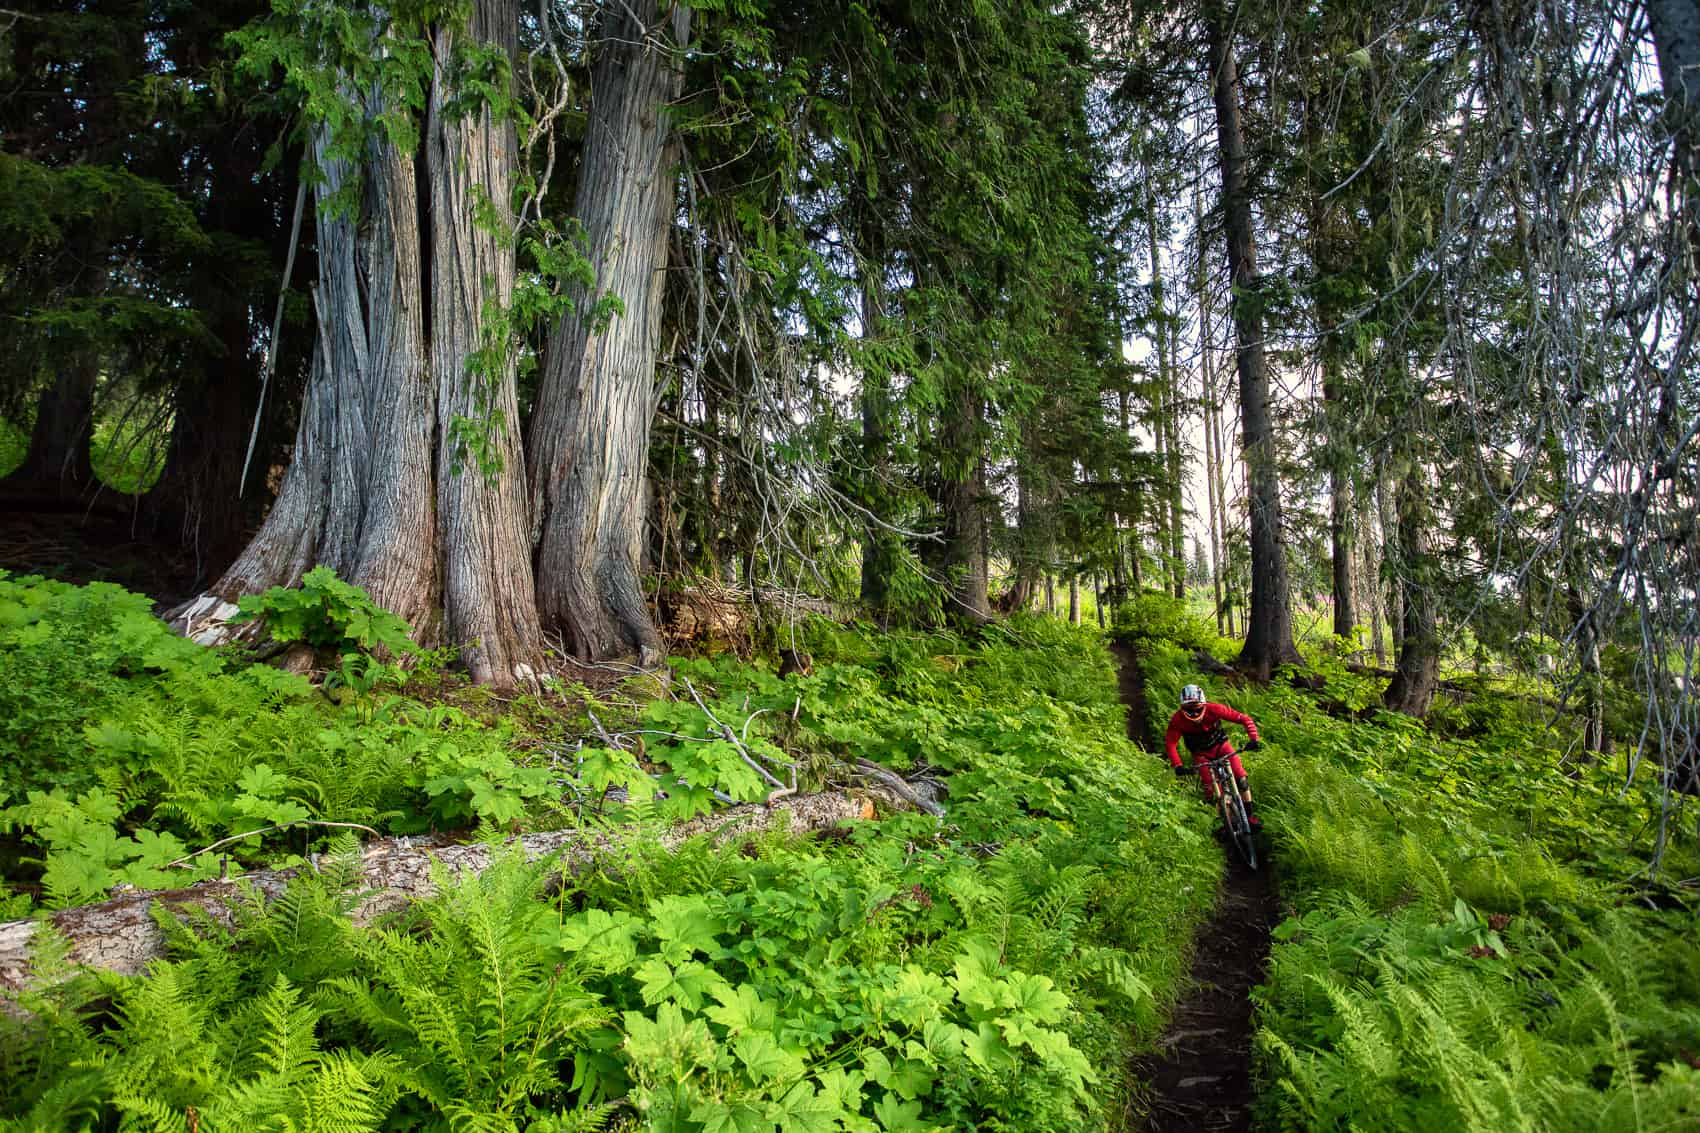 Mountain biking in lush BC forest